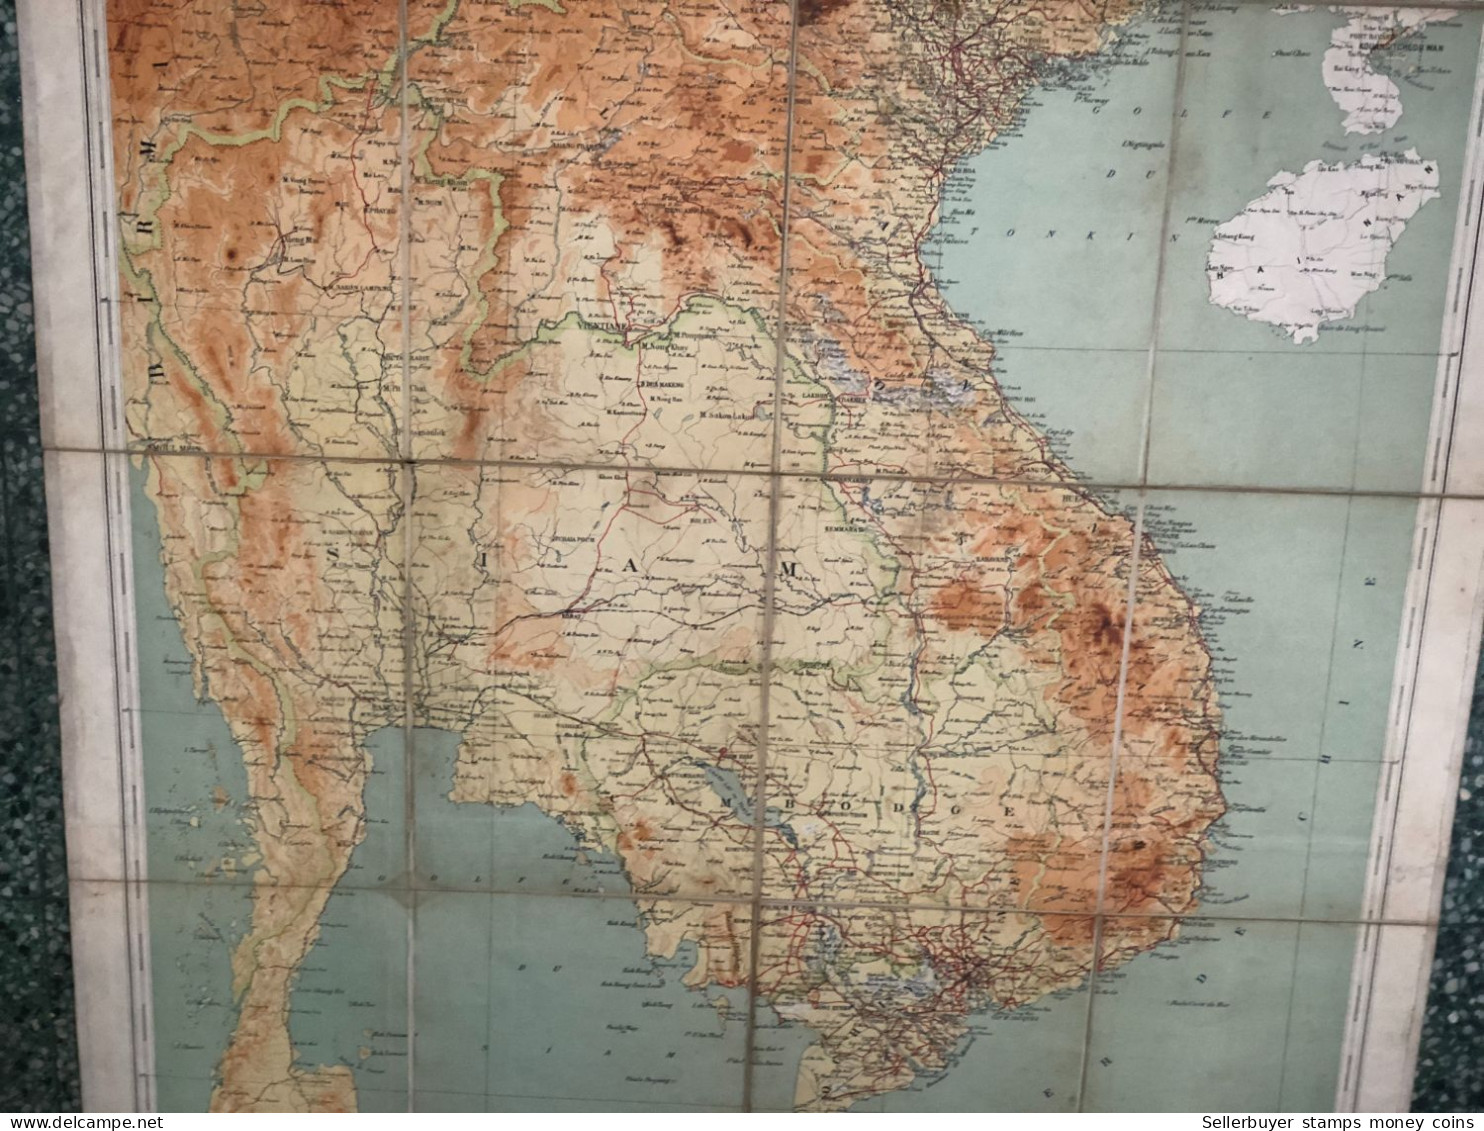 Maps Old-viet Nam Indo-china-kouei Tcheou Before 1937-38-1 Pcs Very Rare - Topographische Kaarten